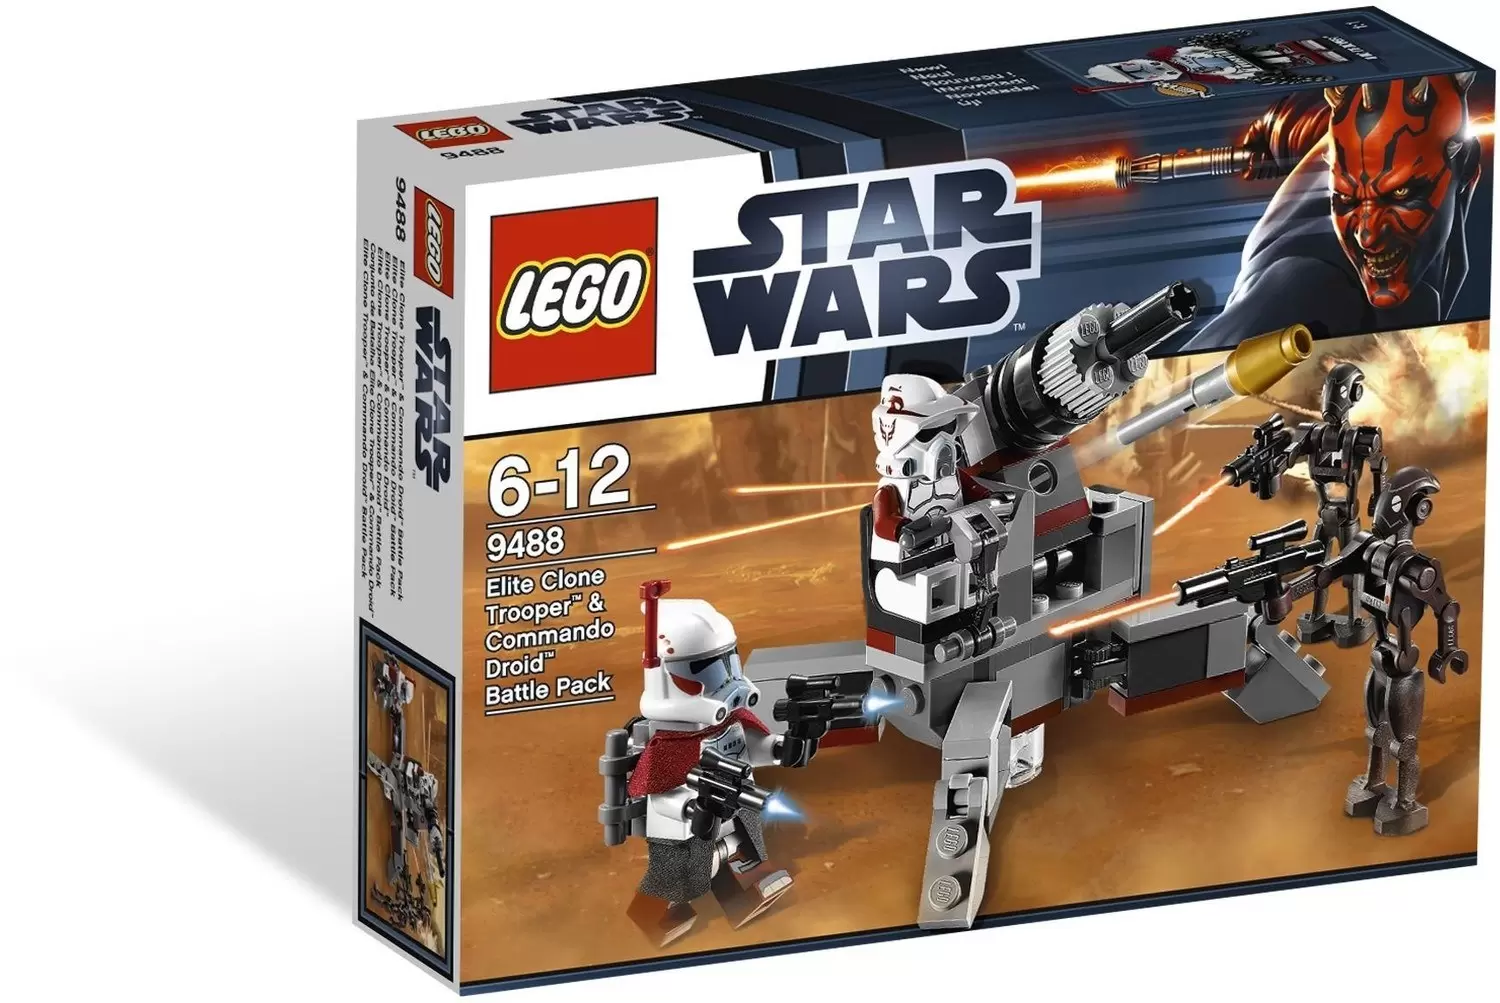 LEGO Star Wars - Elite Clone Trooper & Commando Droid Battle Pack